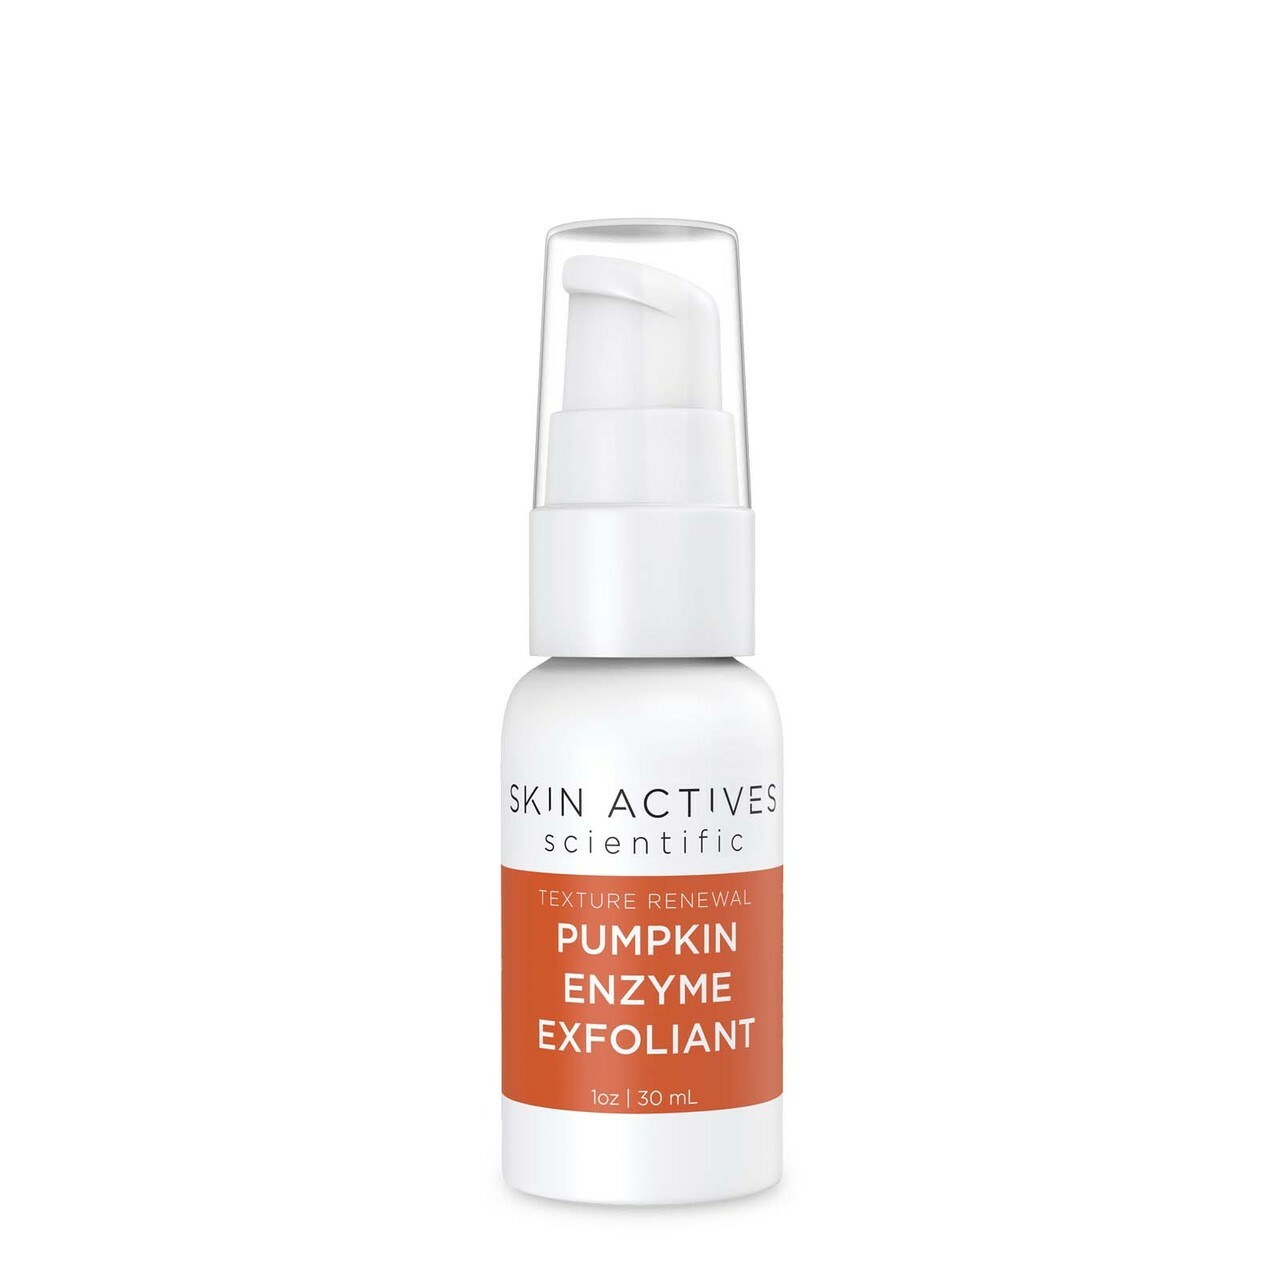 Exfoliant - Pumpkin Enzyme - Skin Actives - 1.0 oz.